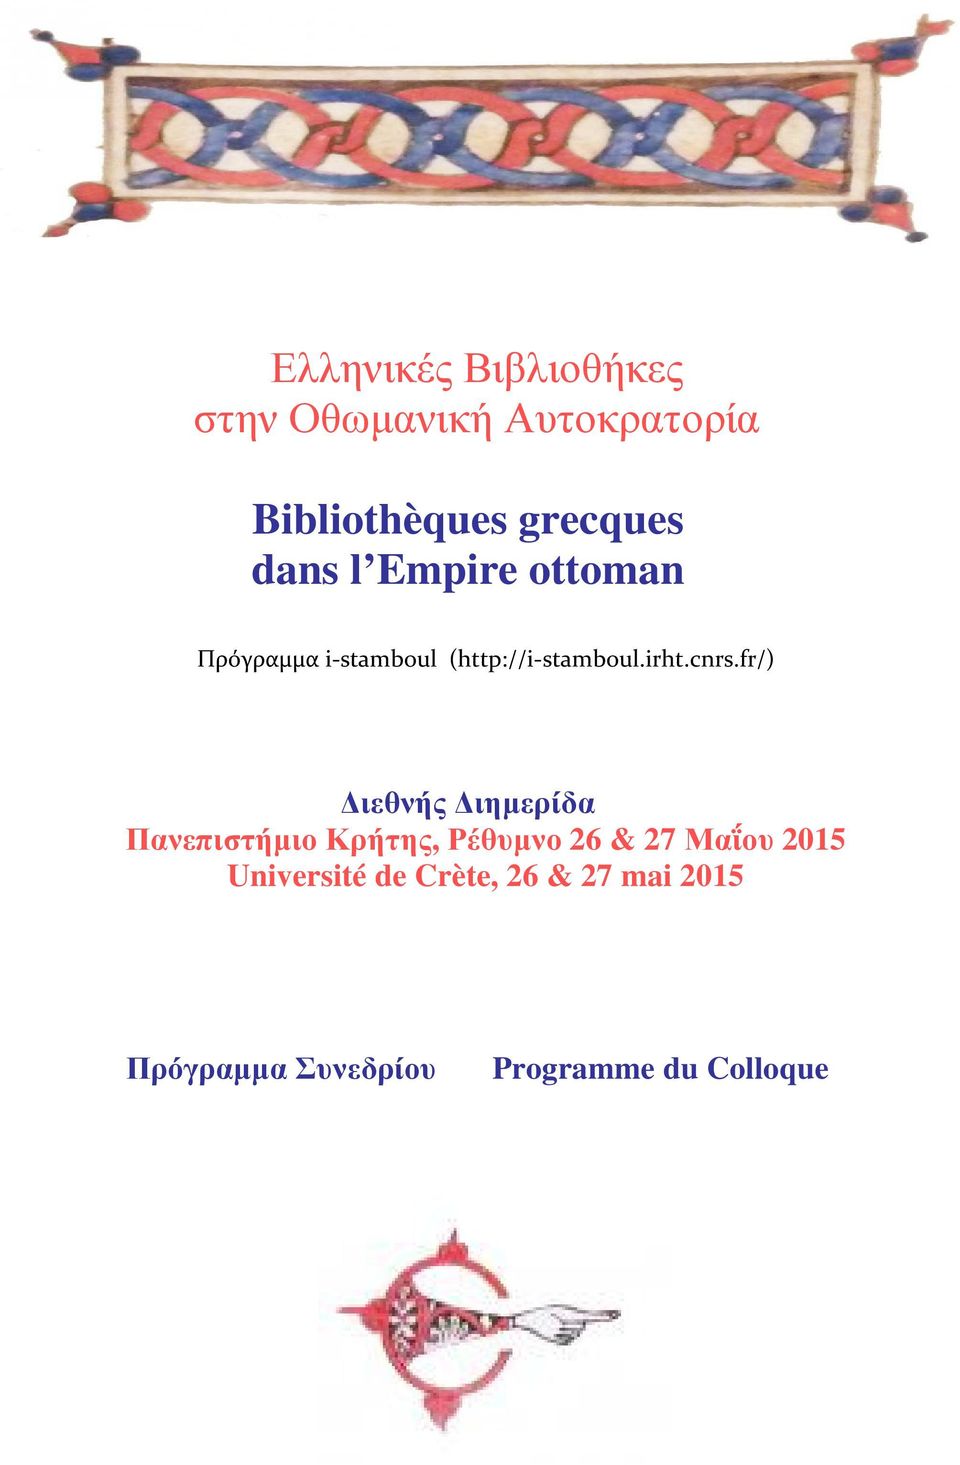 fr/) Διεθνής Διημερίδα Πανεπιστήμιο Κρήτης, Ρέθυμνο 26 & 27 Μαΐου 2015